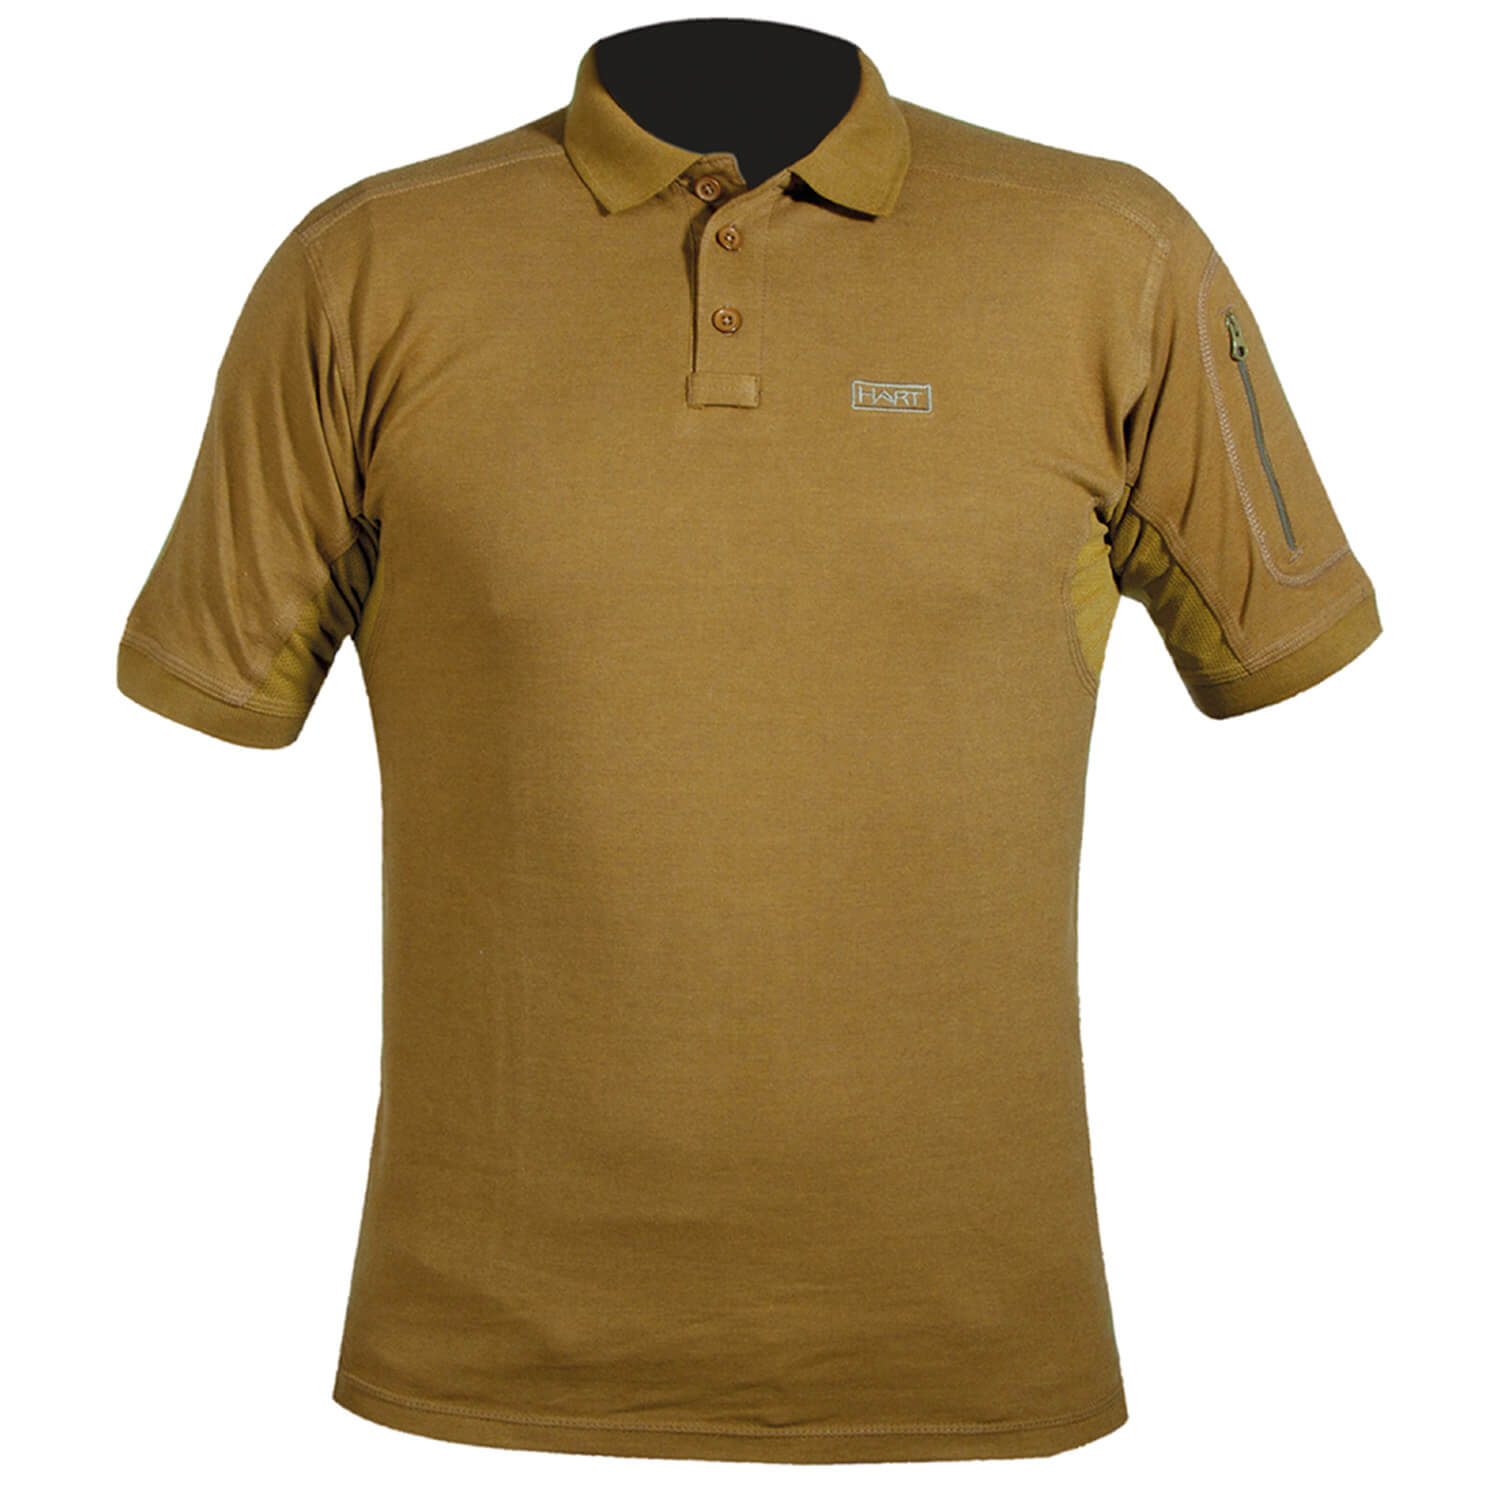 Hart poloshirt Ivory (brown) - T-Shirts